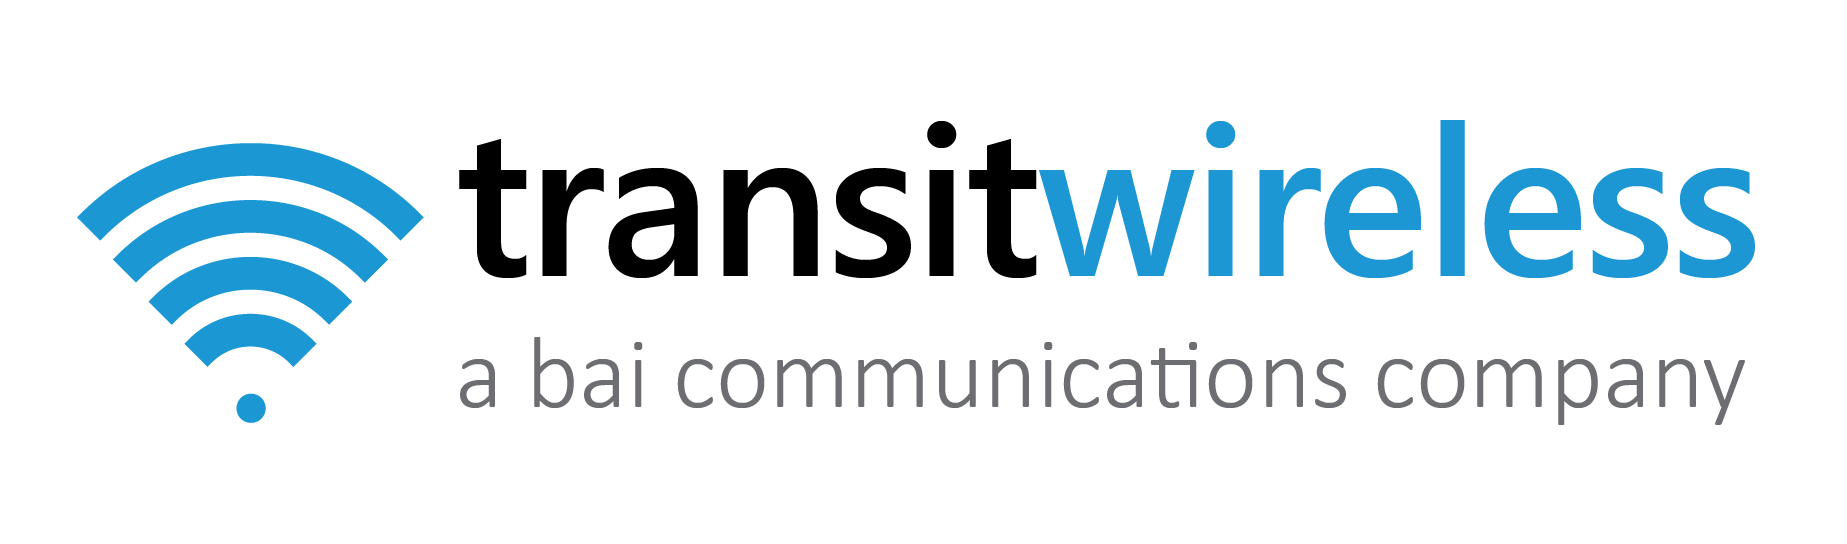 cropped-Transit-Wireless-logo_Oct-2020-1